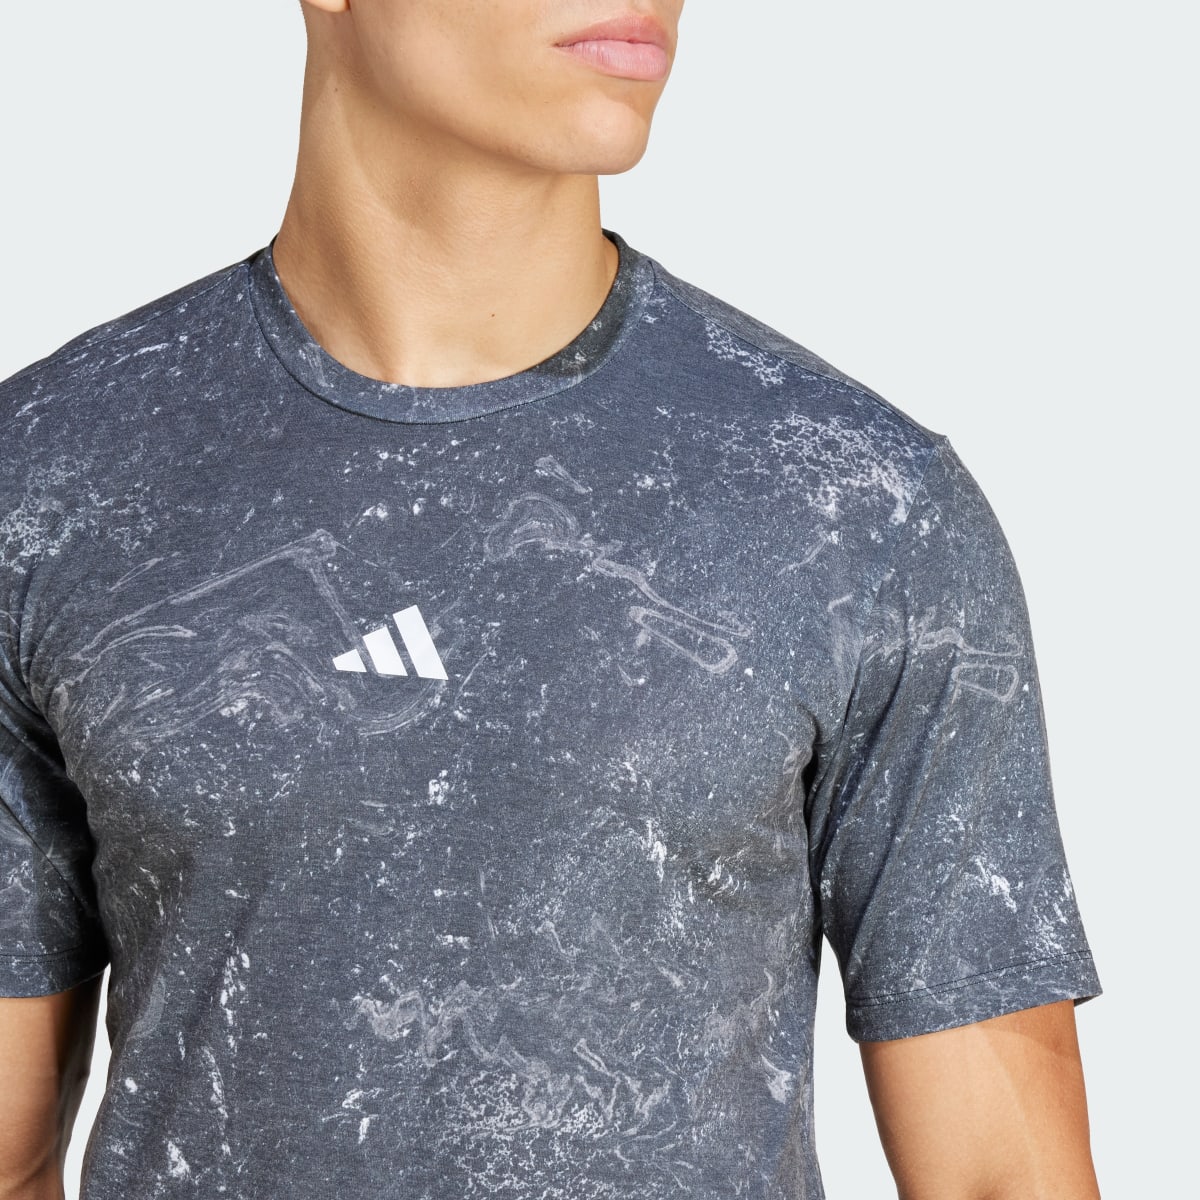 Adidas Power Workout T-Shirt. 6